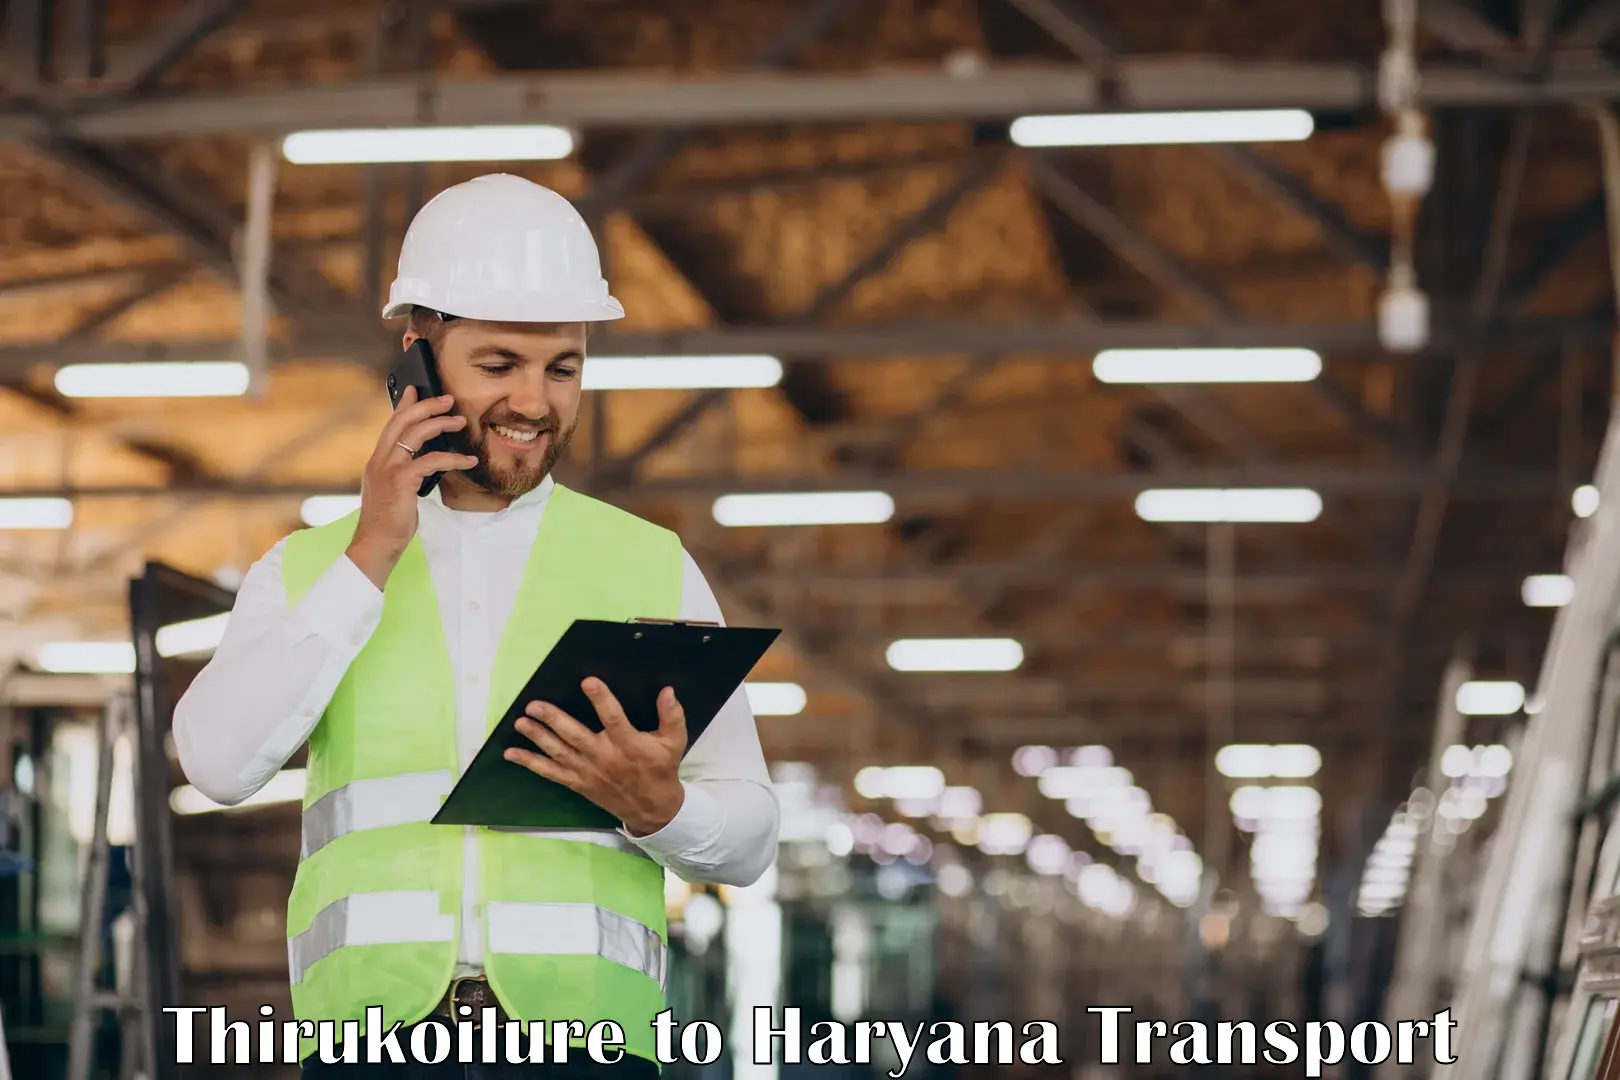 Delivery service Thirukoilure to Bilaspur Haryana